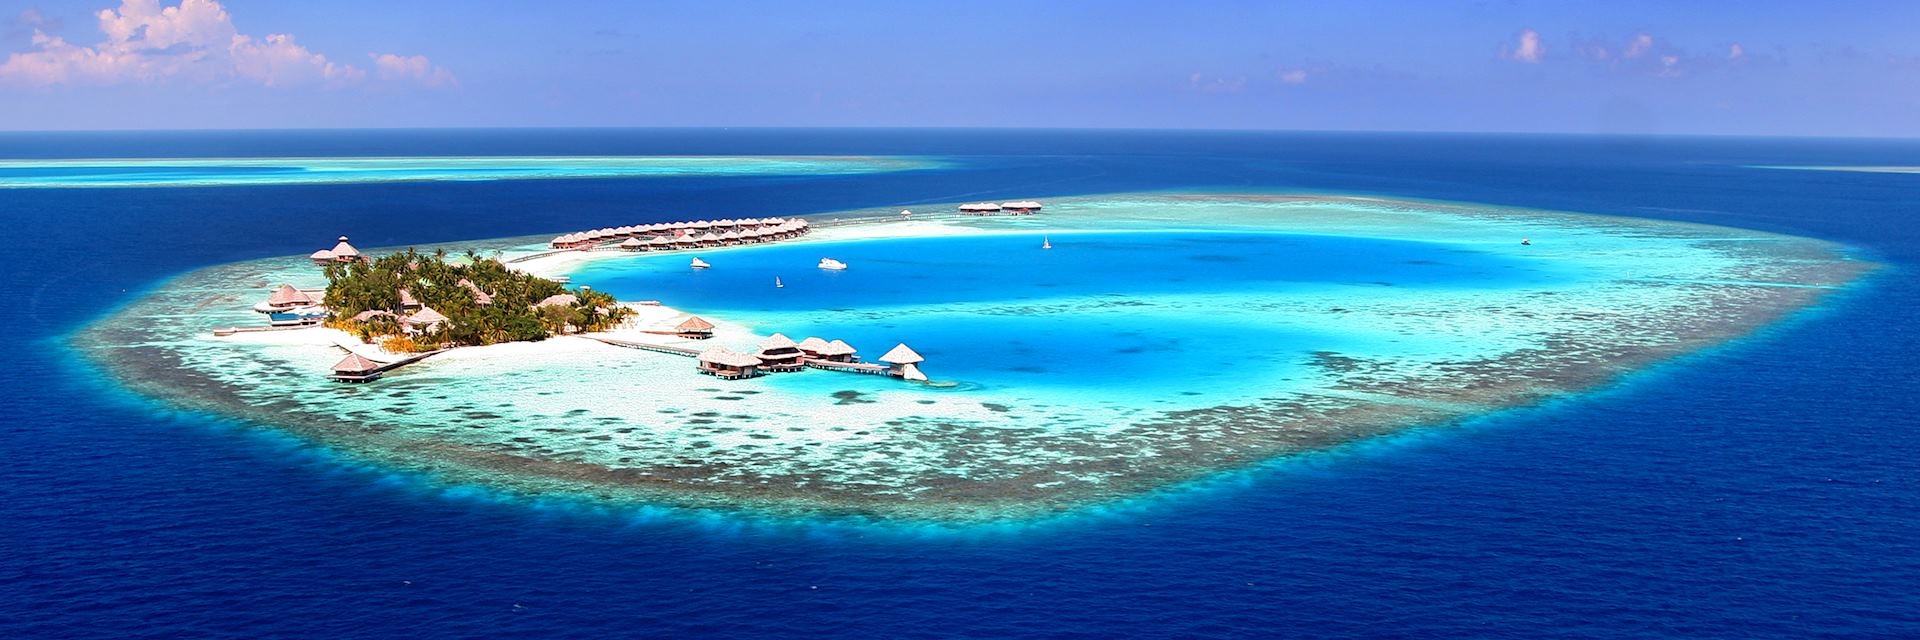 Huvafen Fushi in the Maldives